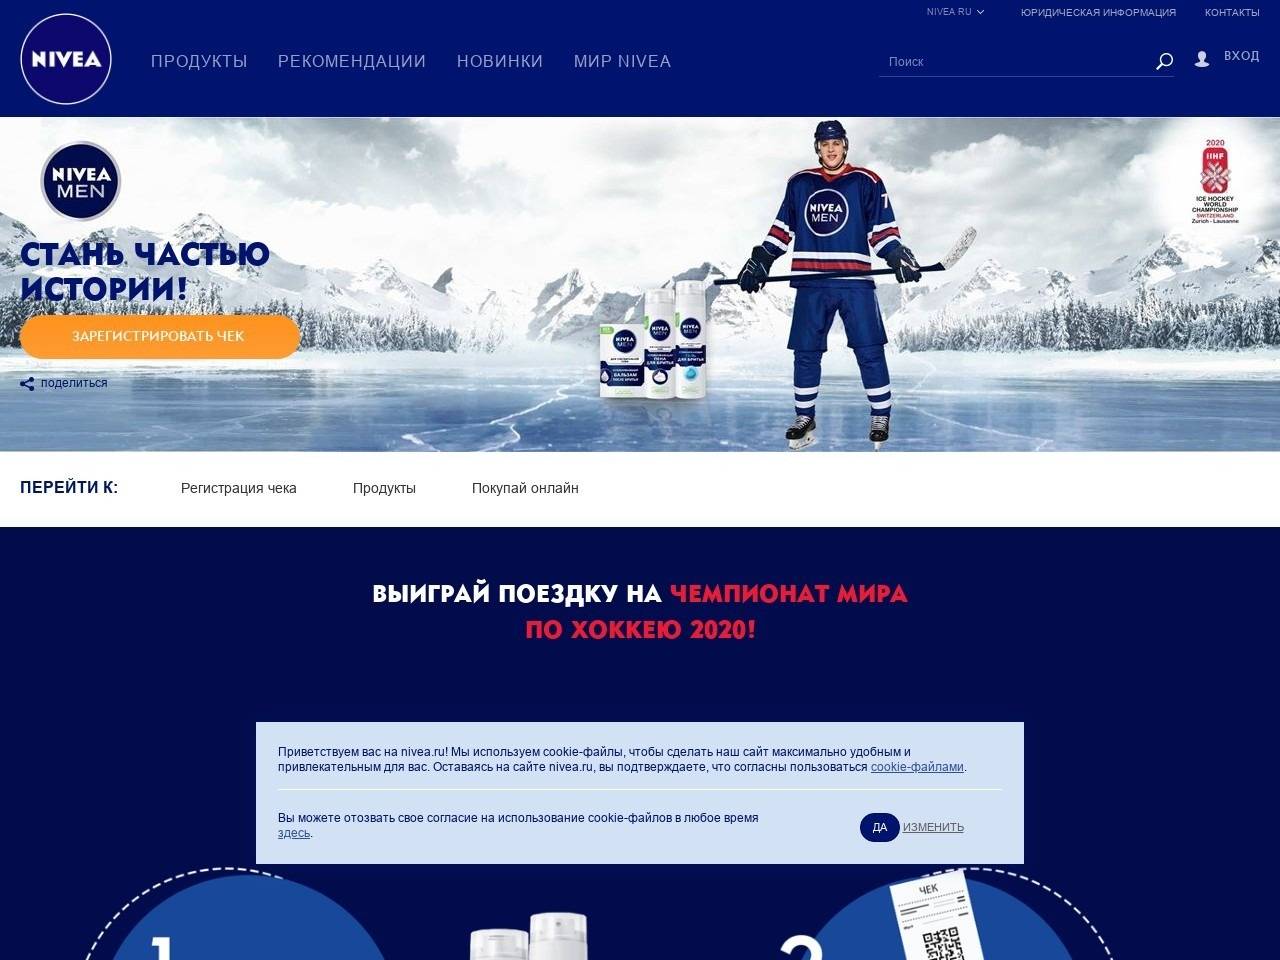 www.nivea.ru/new-from-nivea/hockey2020 регистрация 